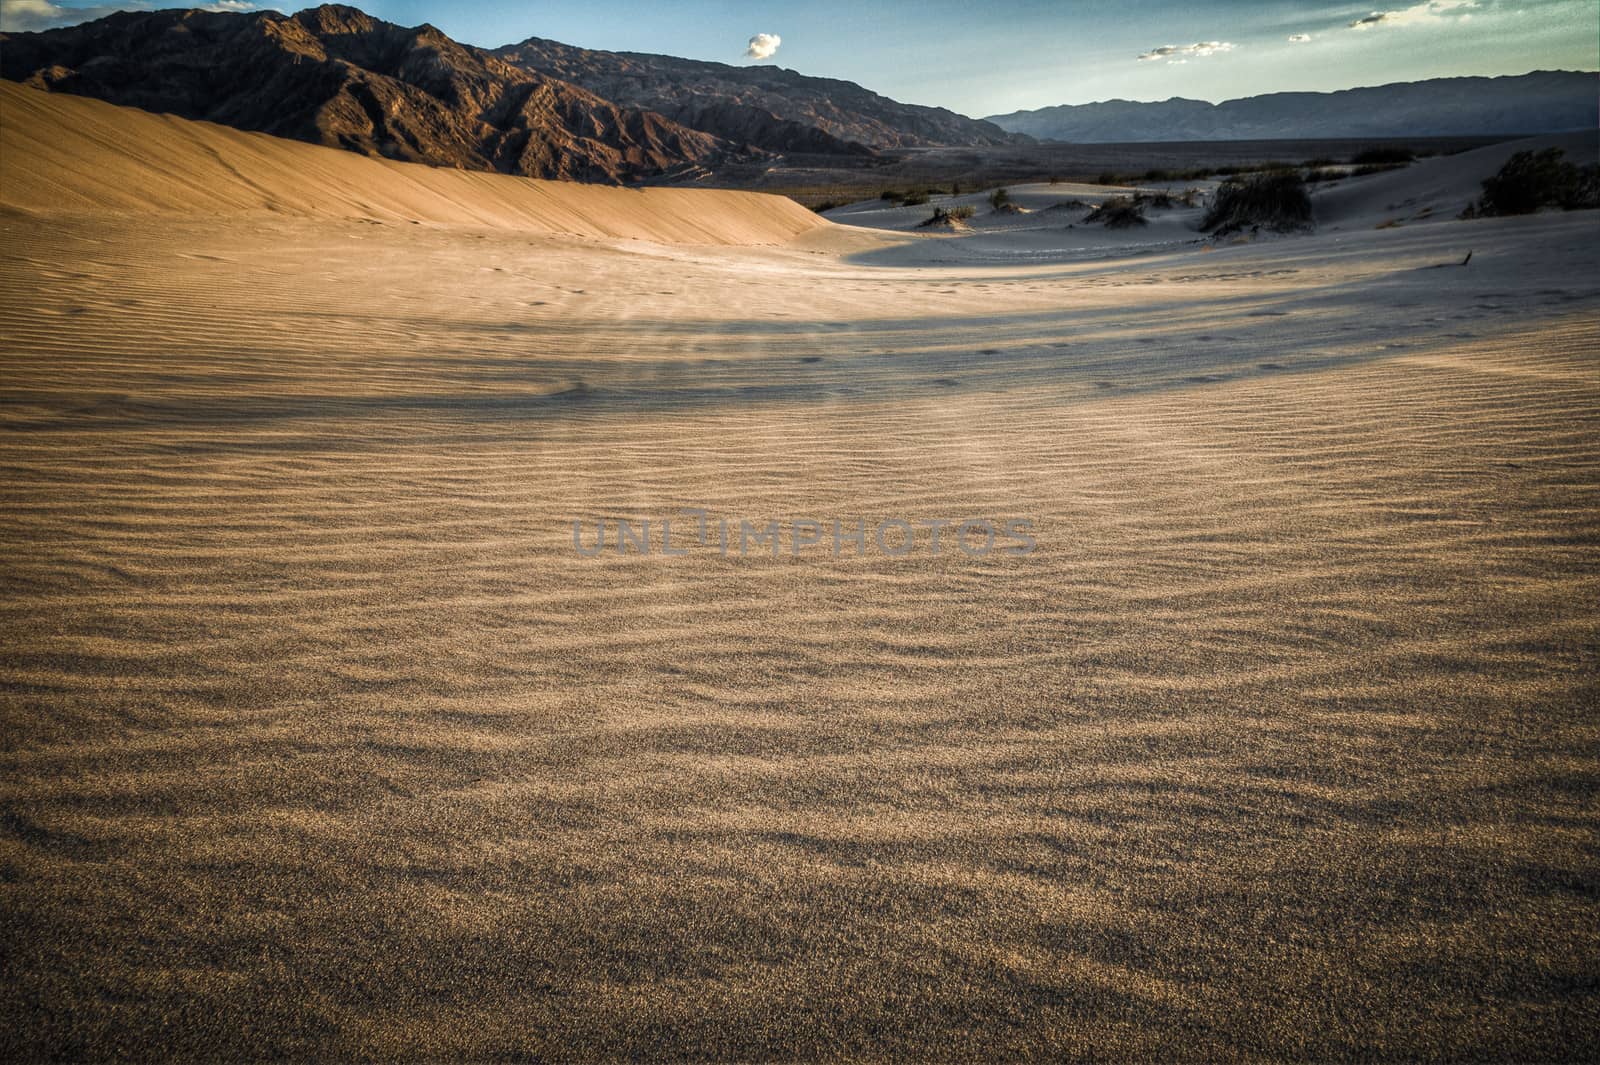 Death valley look into desert sand dunes before devils korn field